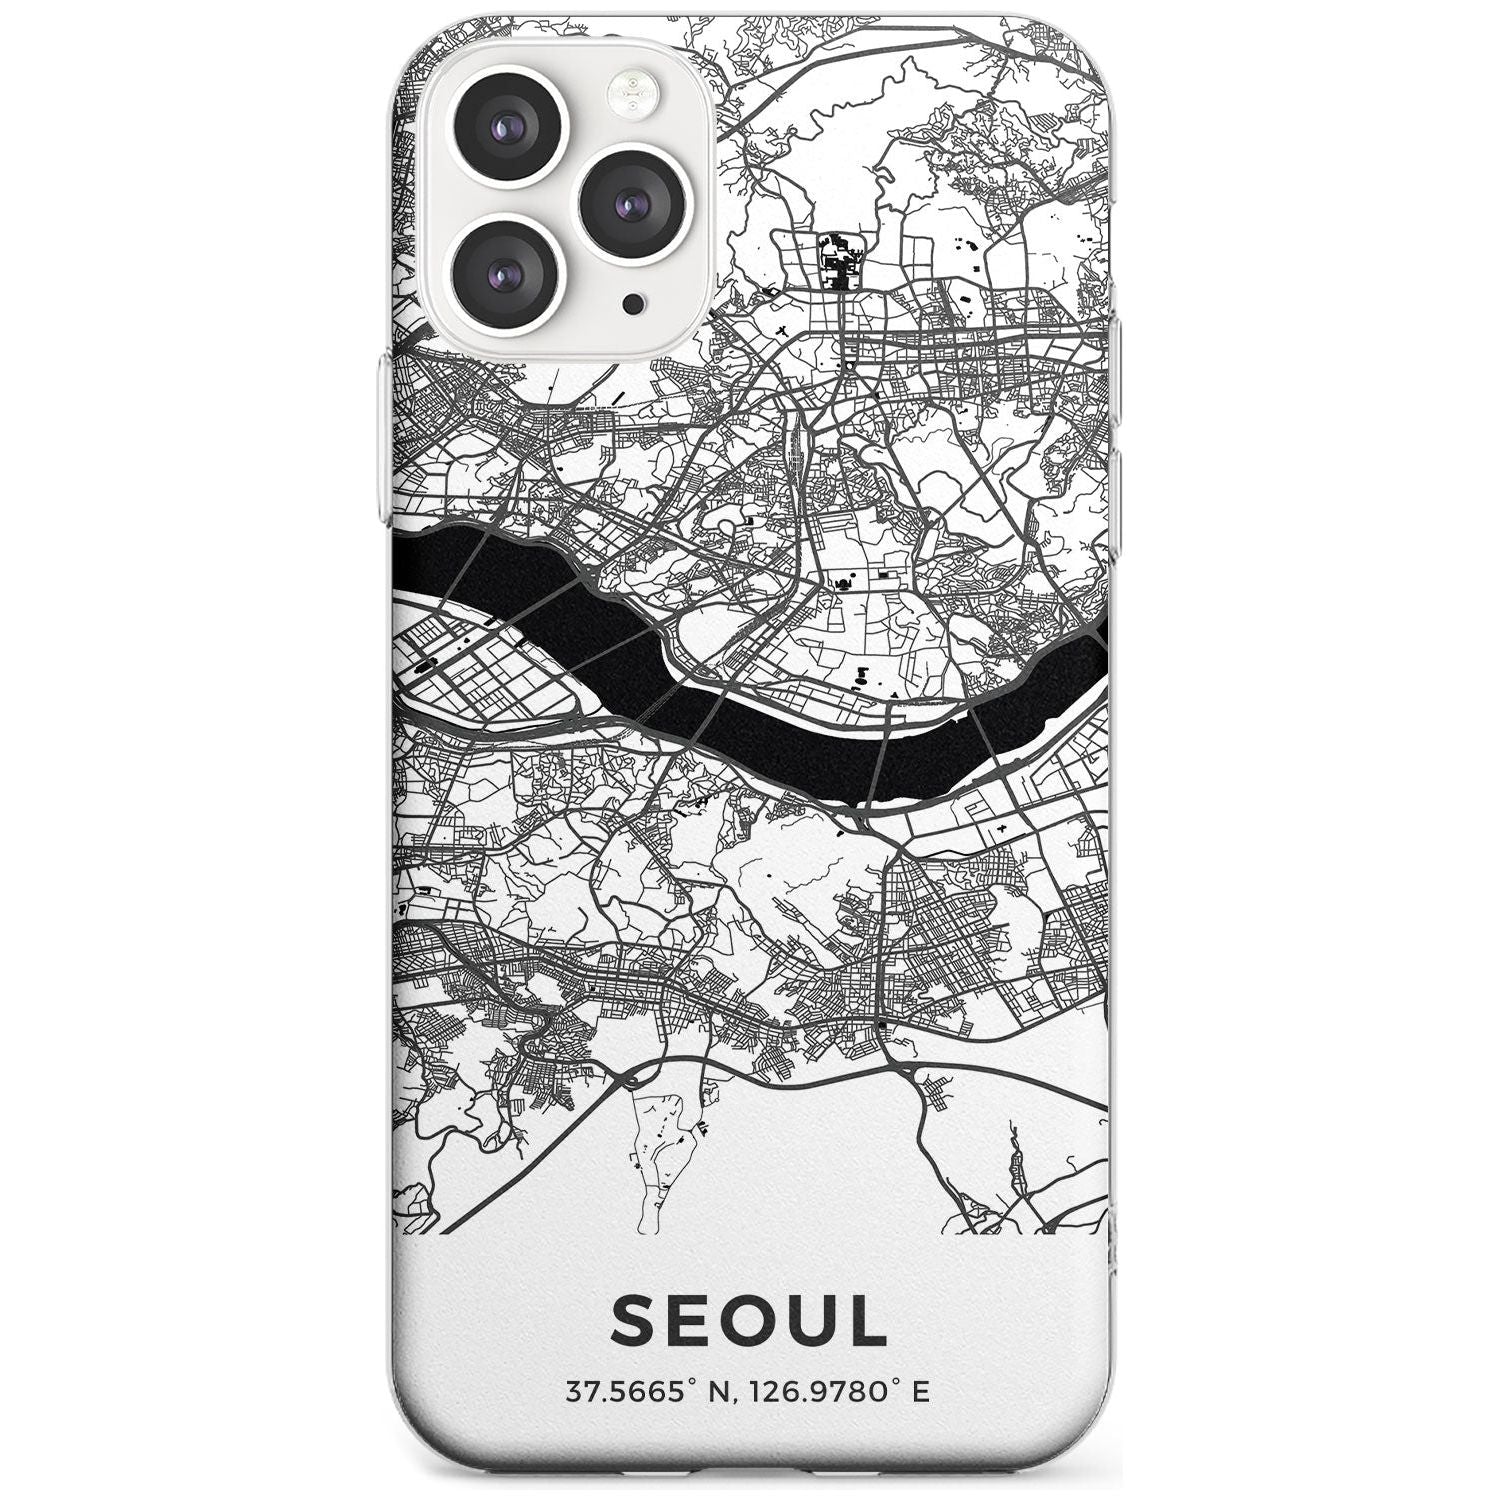 Map of Seoul, South Korea Slim TPU Phone Case for iPhone 11 Pro Max